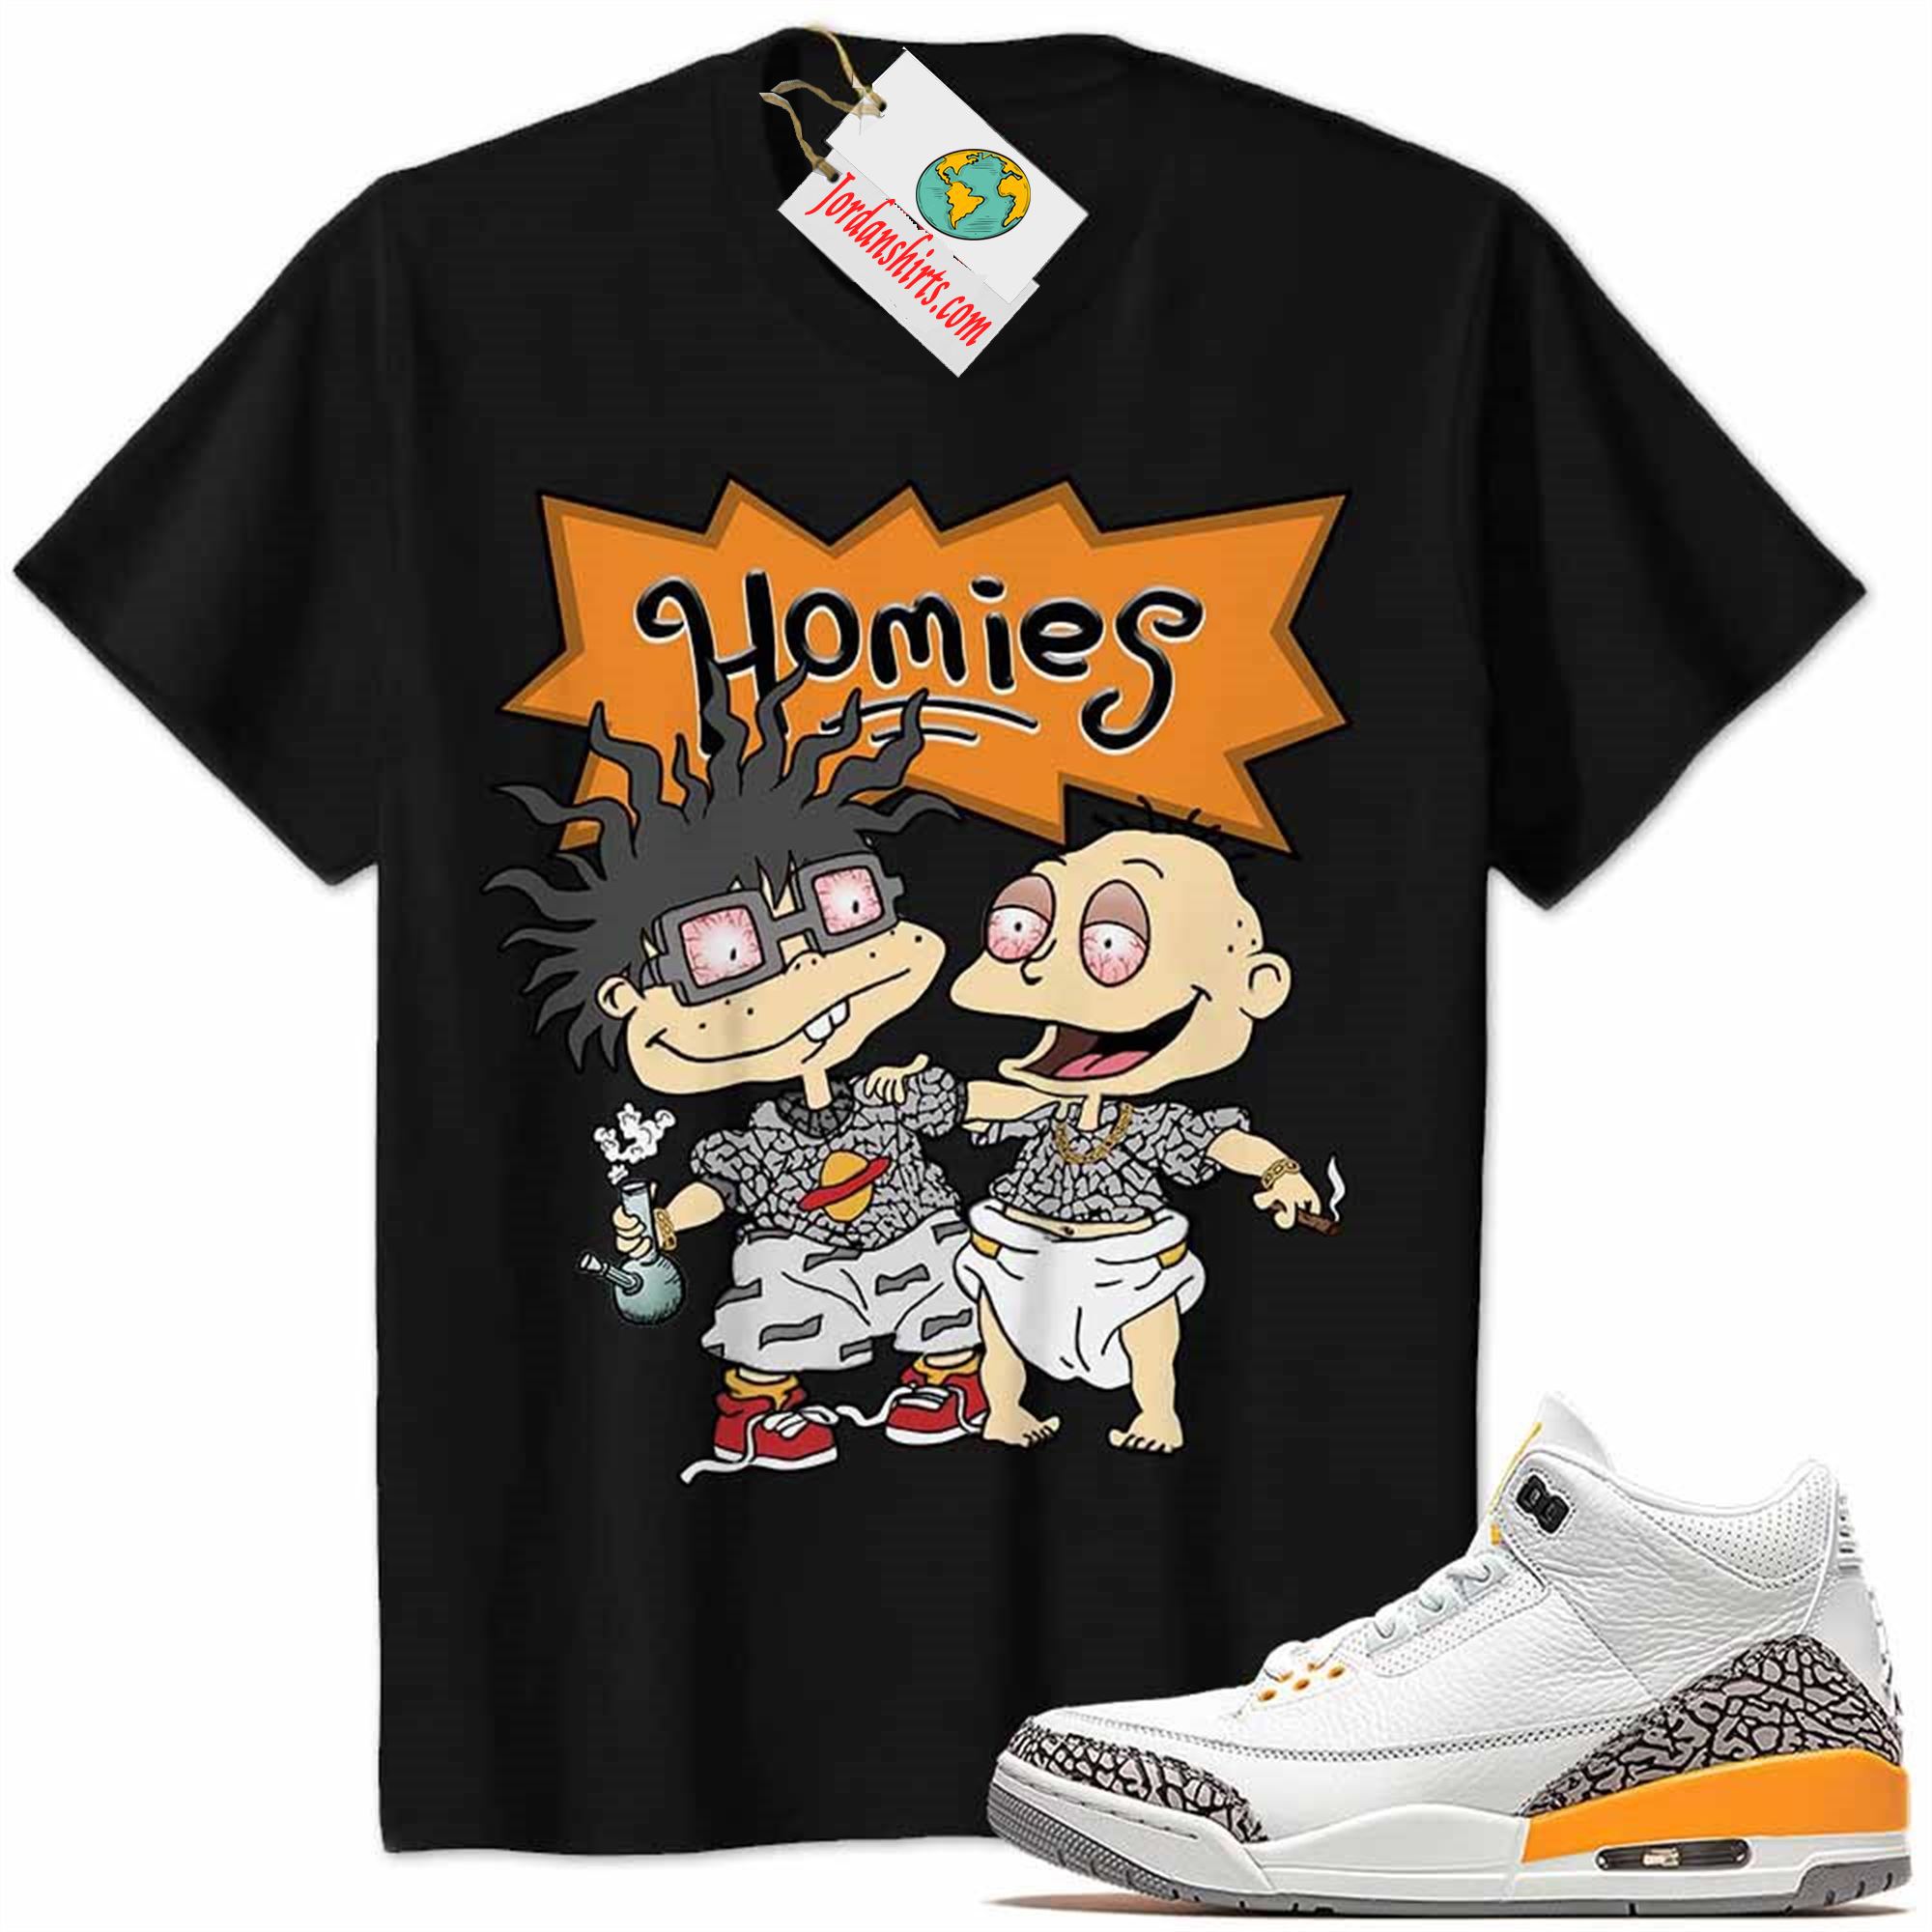 Jordan 3 Shirt, Jordan 3 Laser Orange Shirt Hommies Tommy Pickles Chuckie Finster Rugrats Black Size Up To 5xl